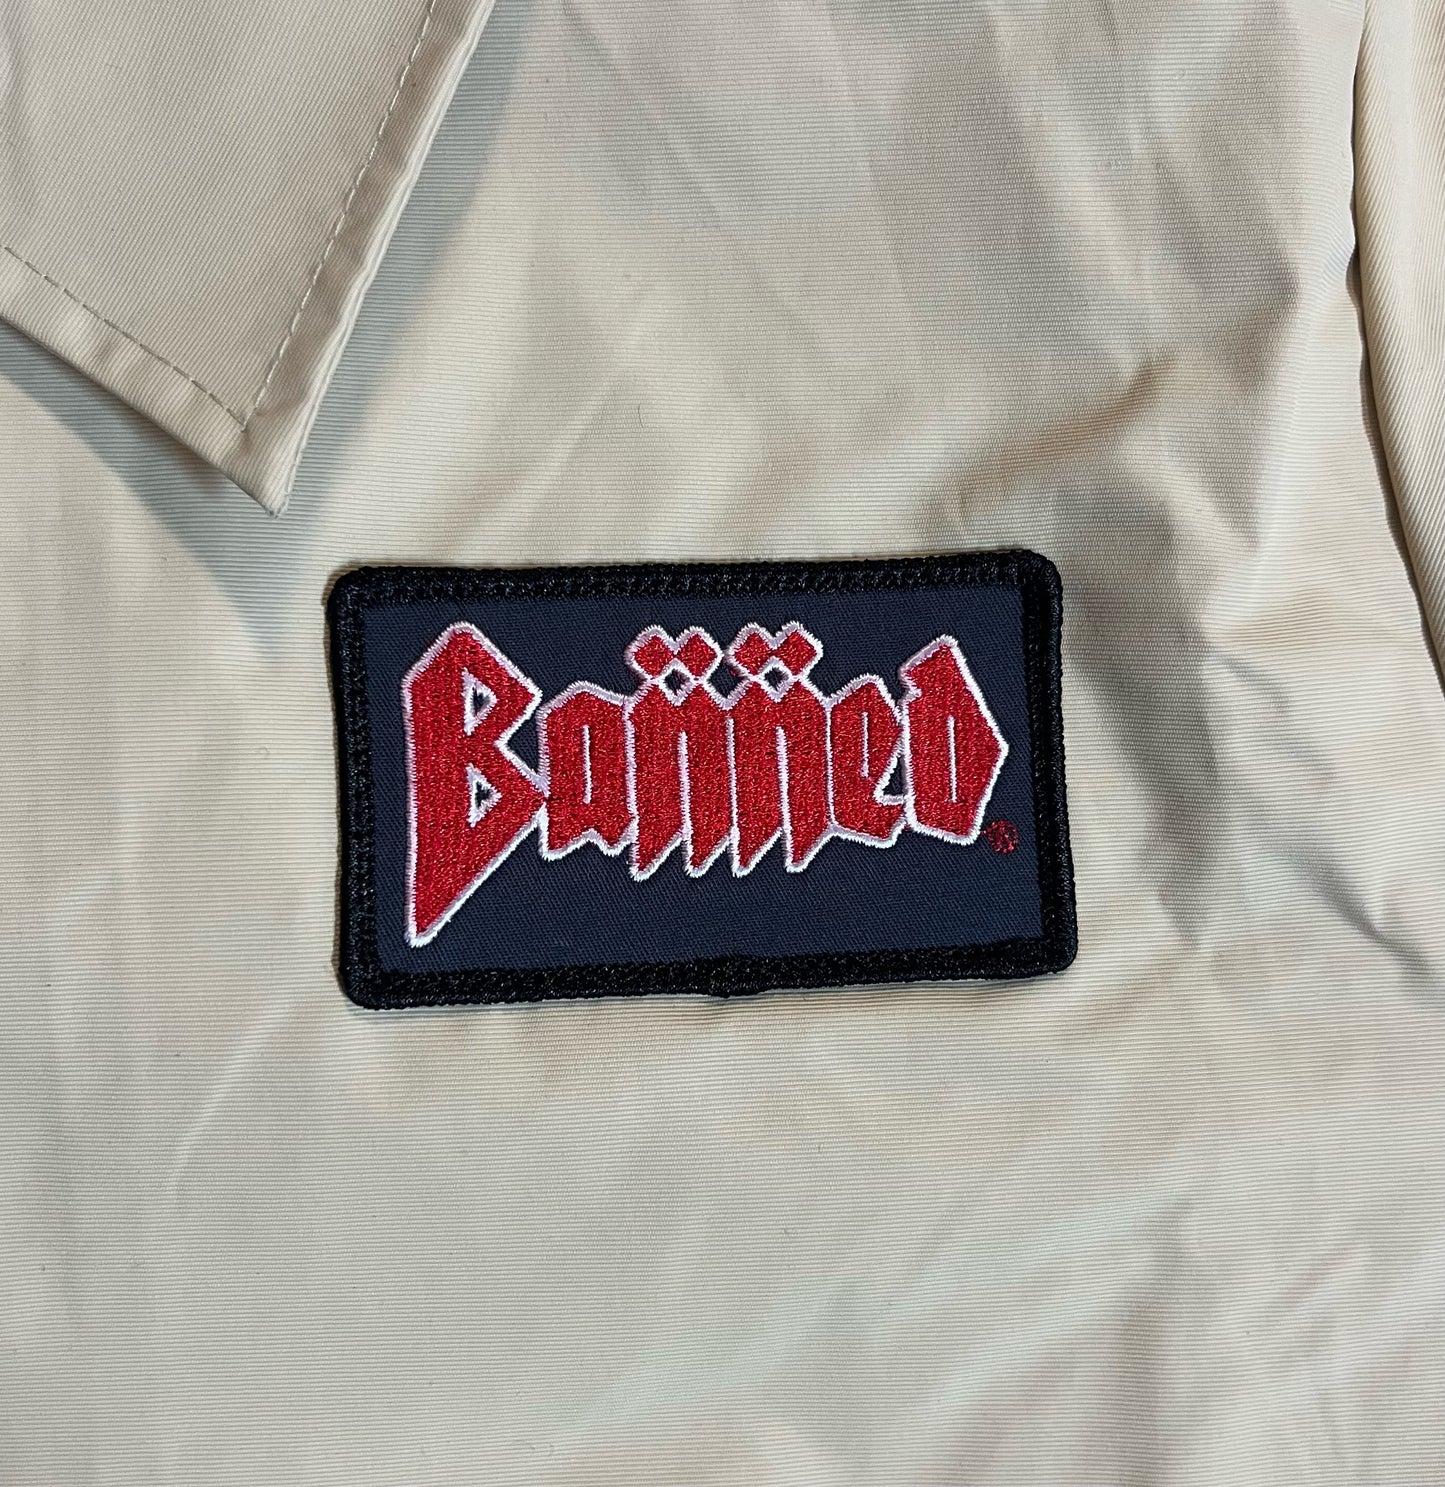 BANNED Stitched Pro Coach Jacket Tan